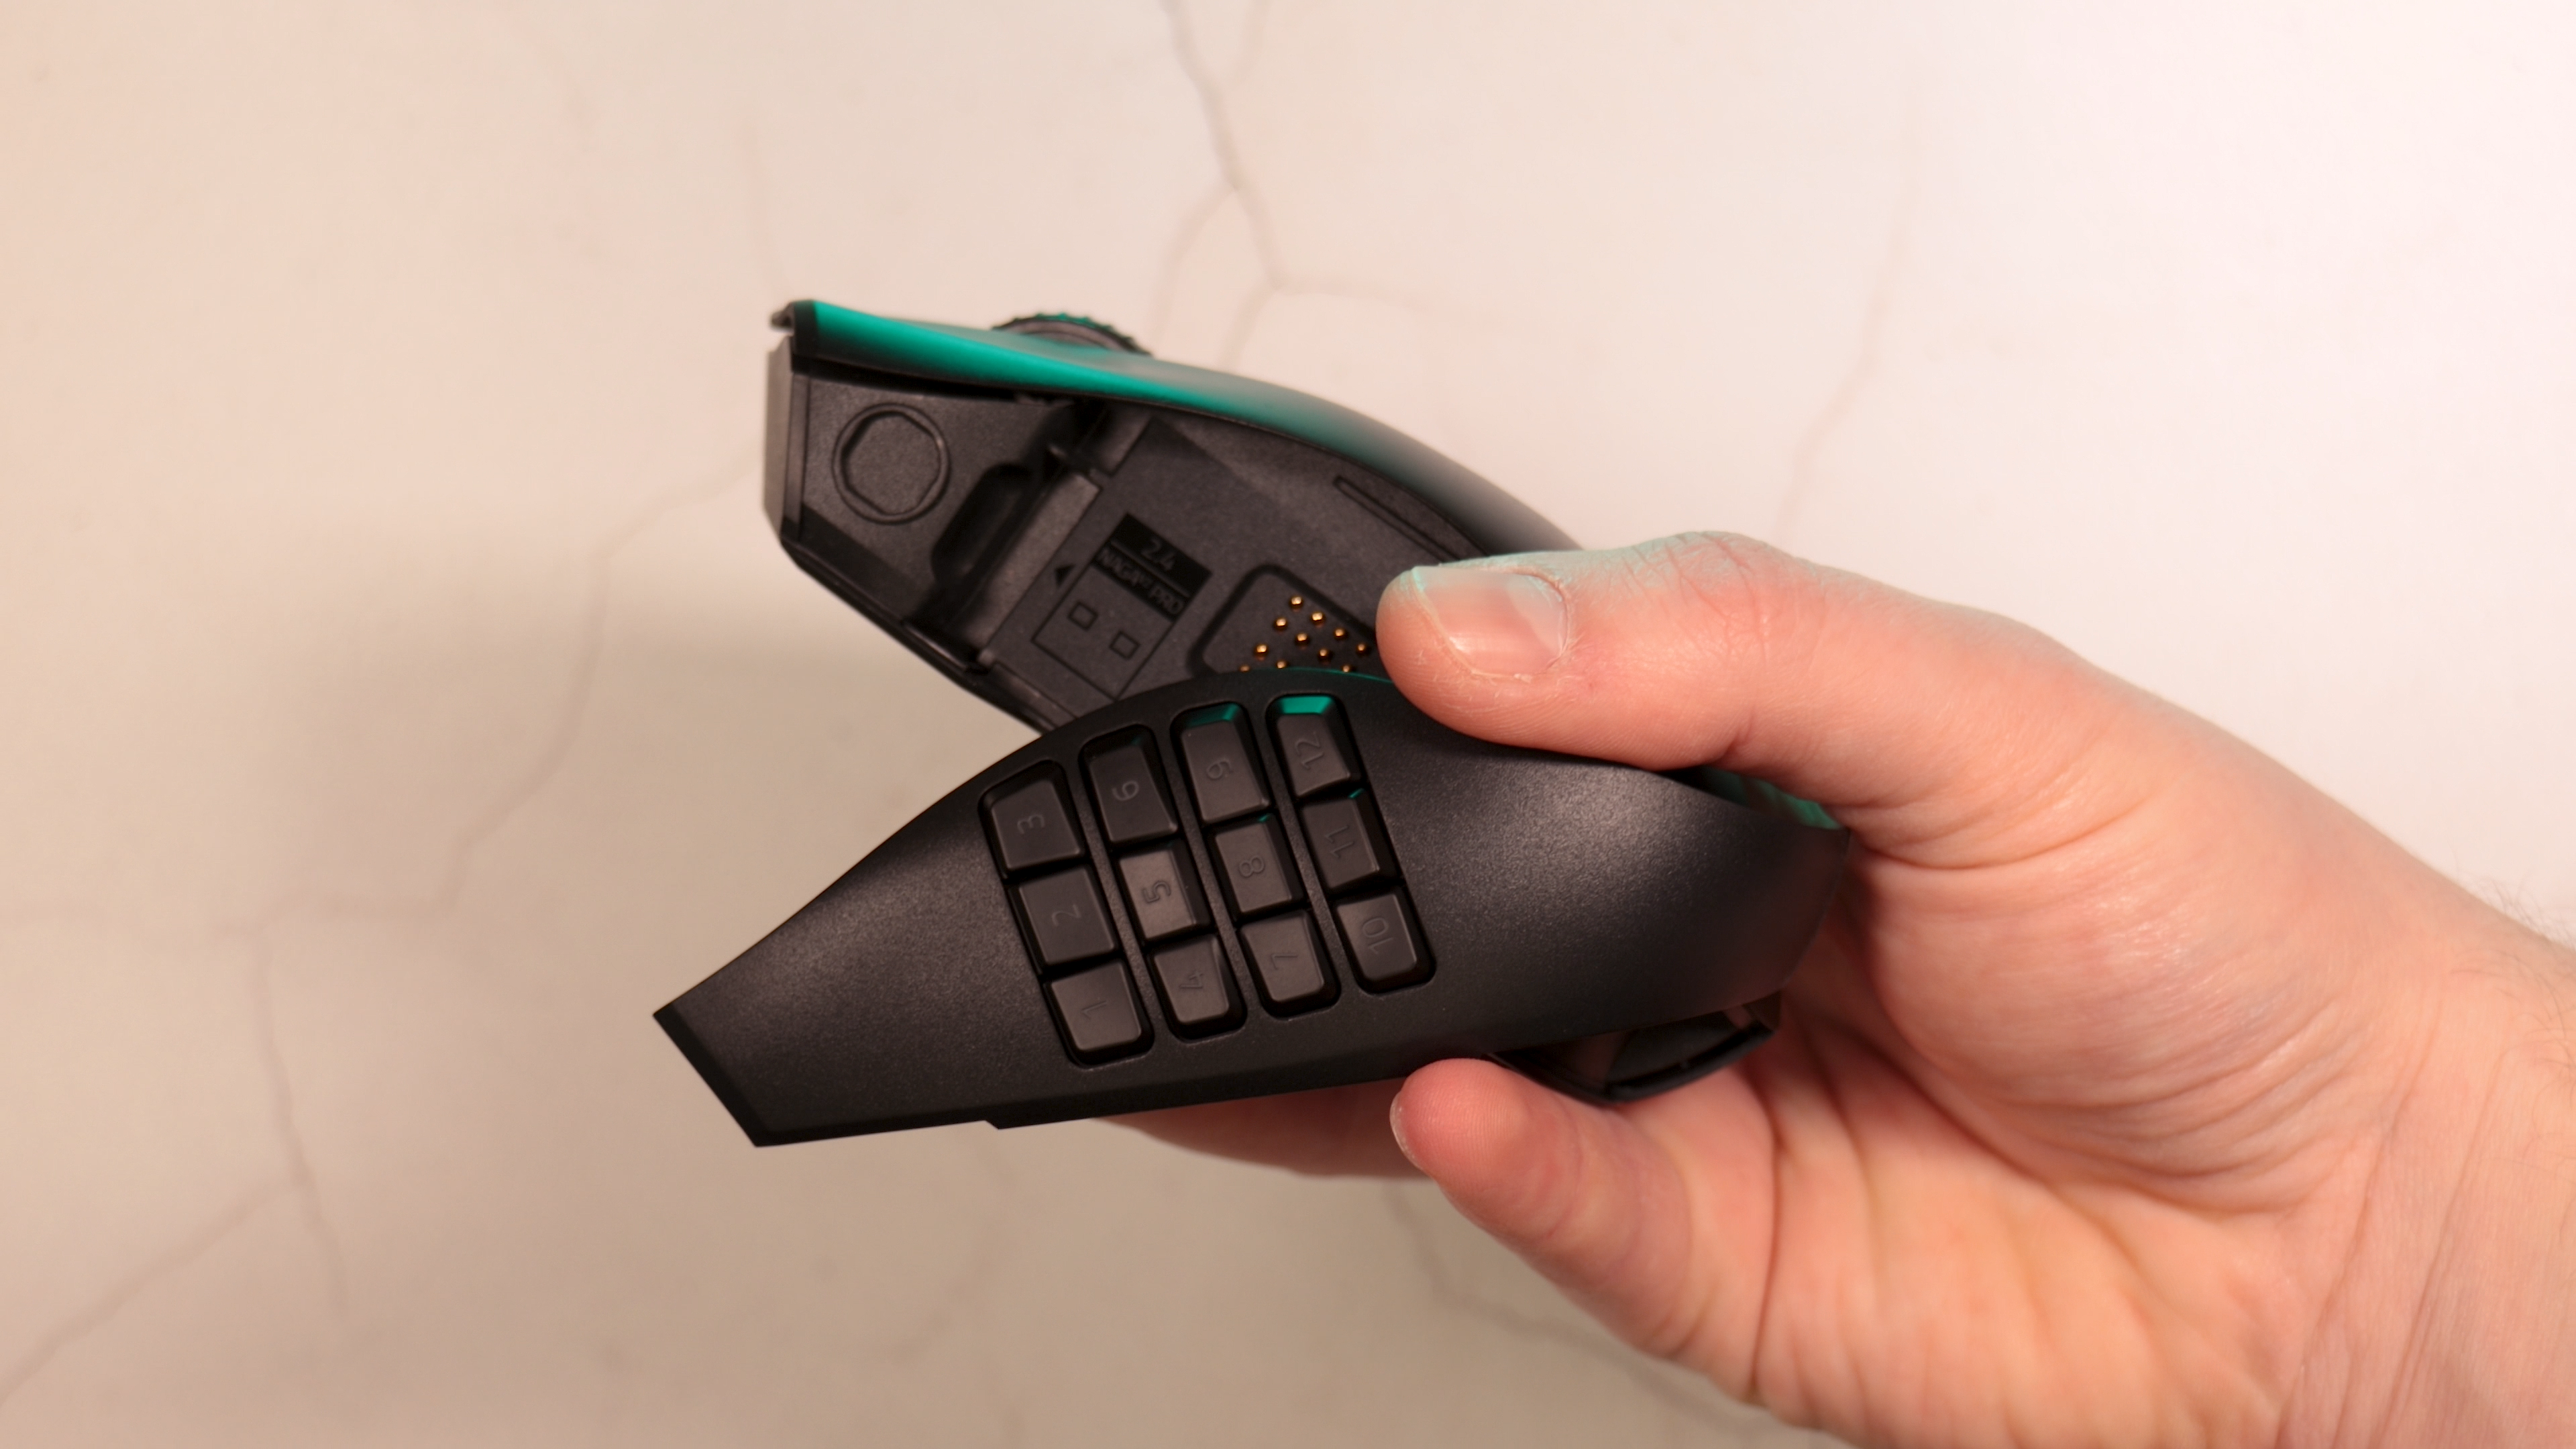 Customizable MMO Wireless Gaming Mouse - Razer Naga V2 Pro